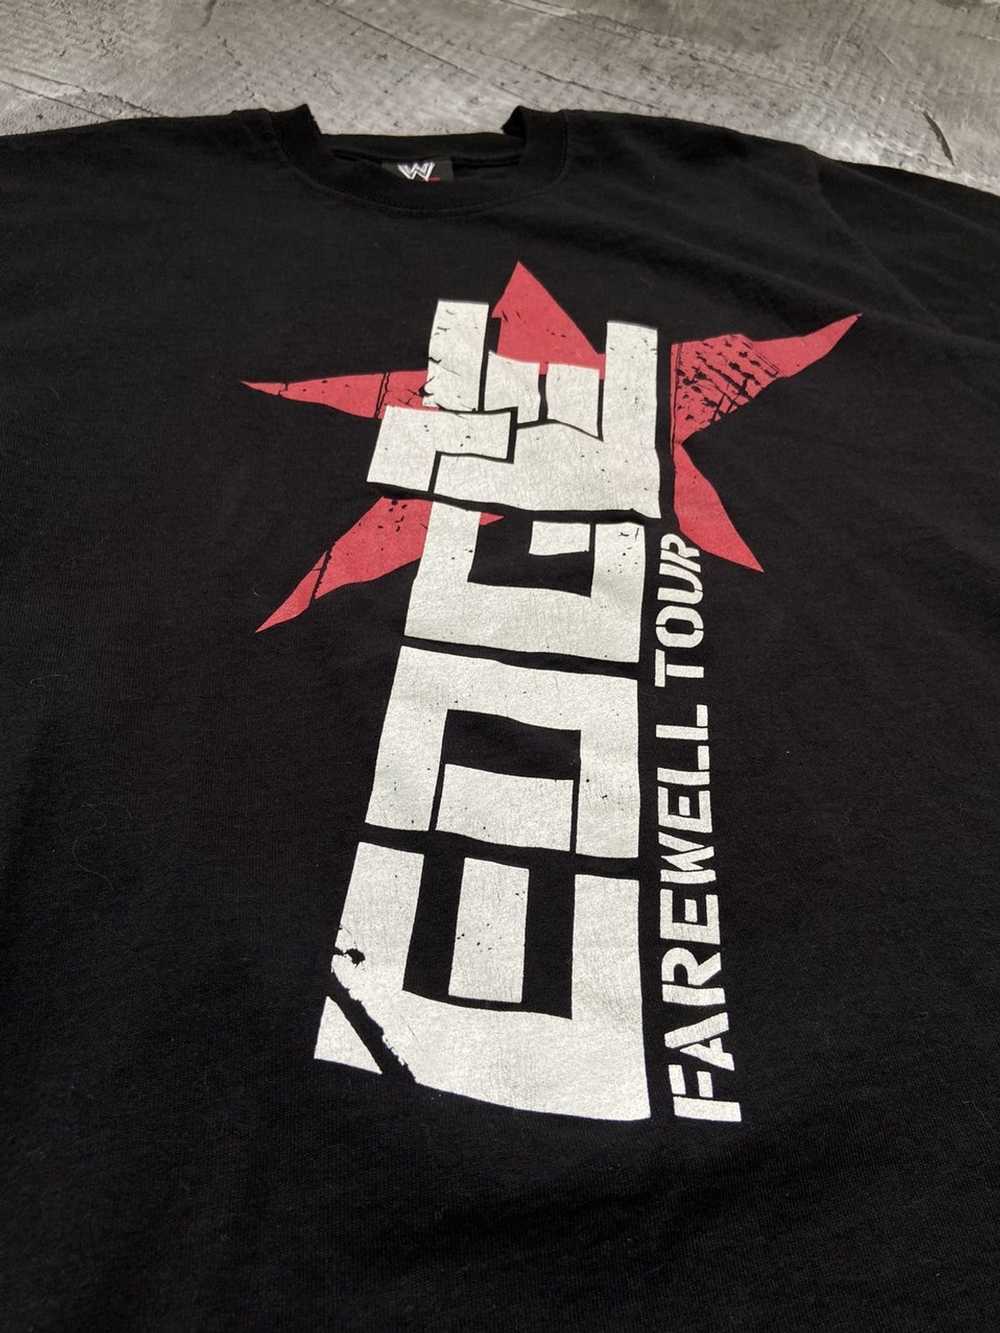 Authentic × Wwe WWE Authentic Edge T-shirt - image 2